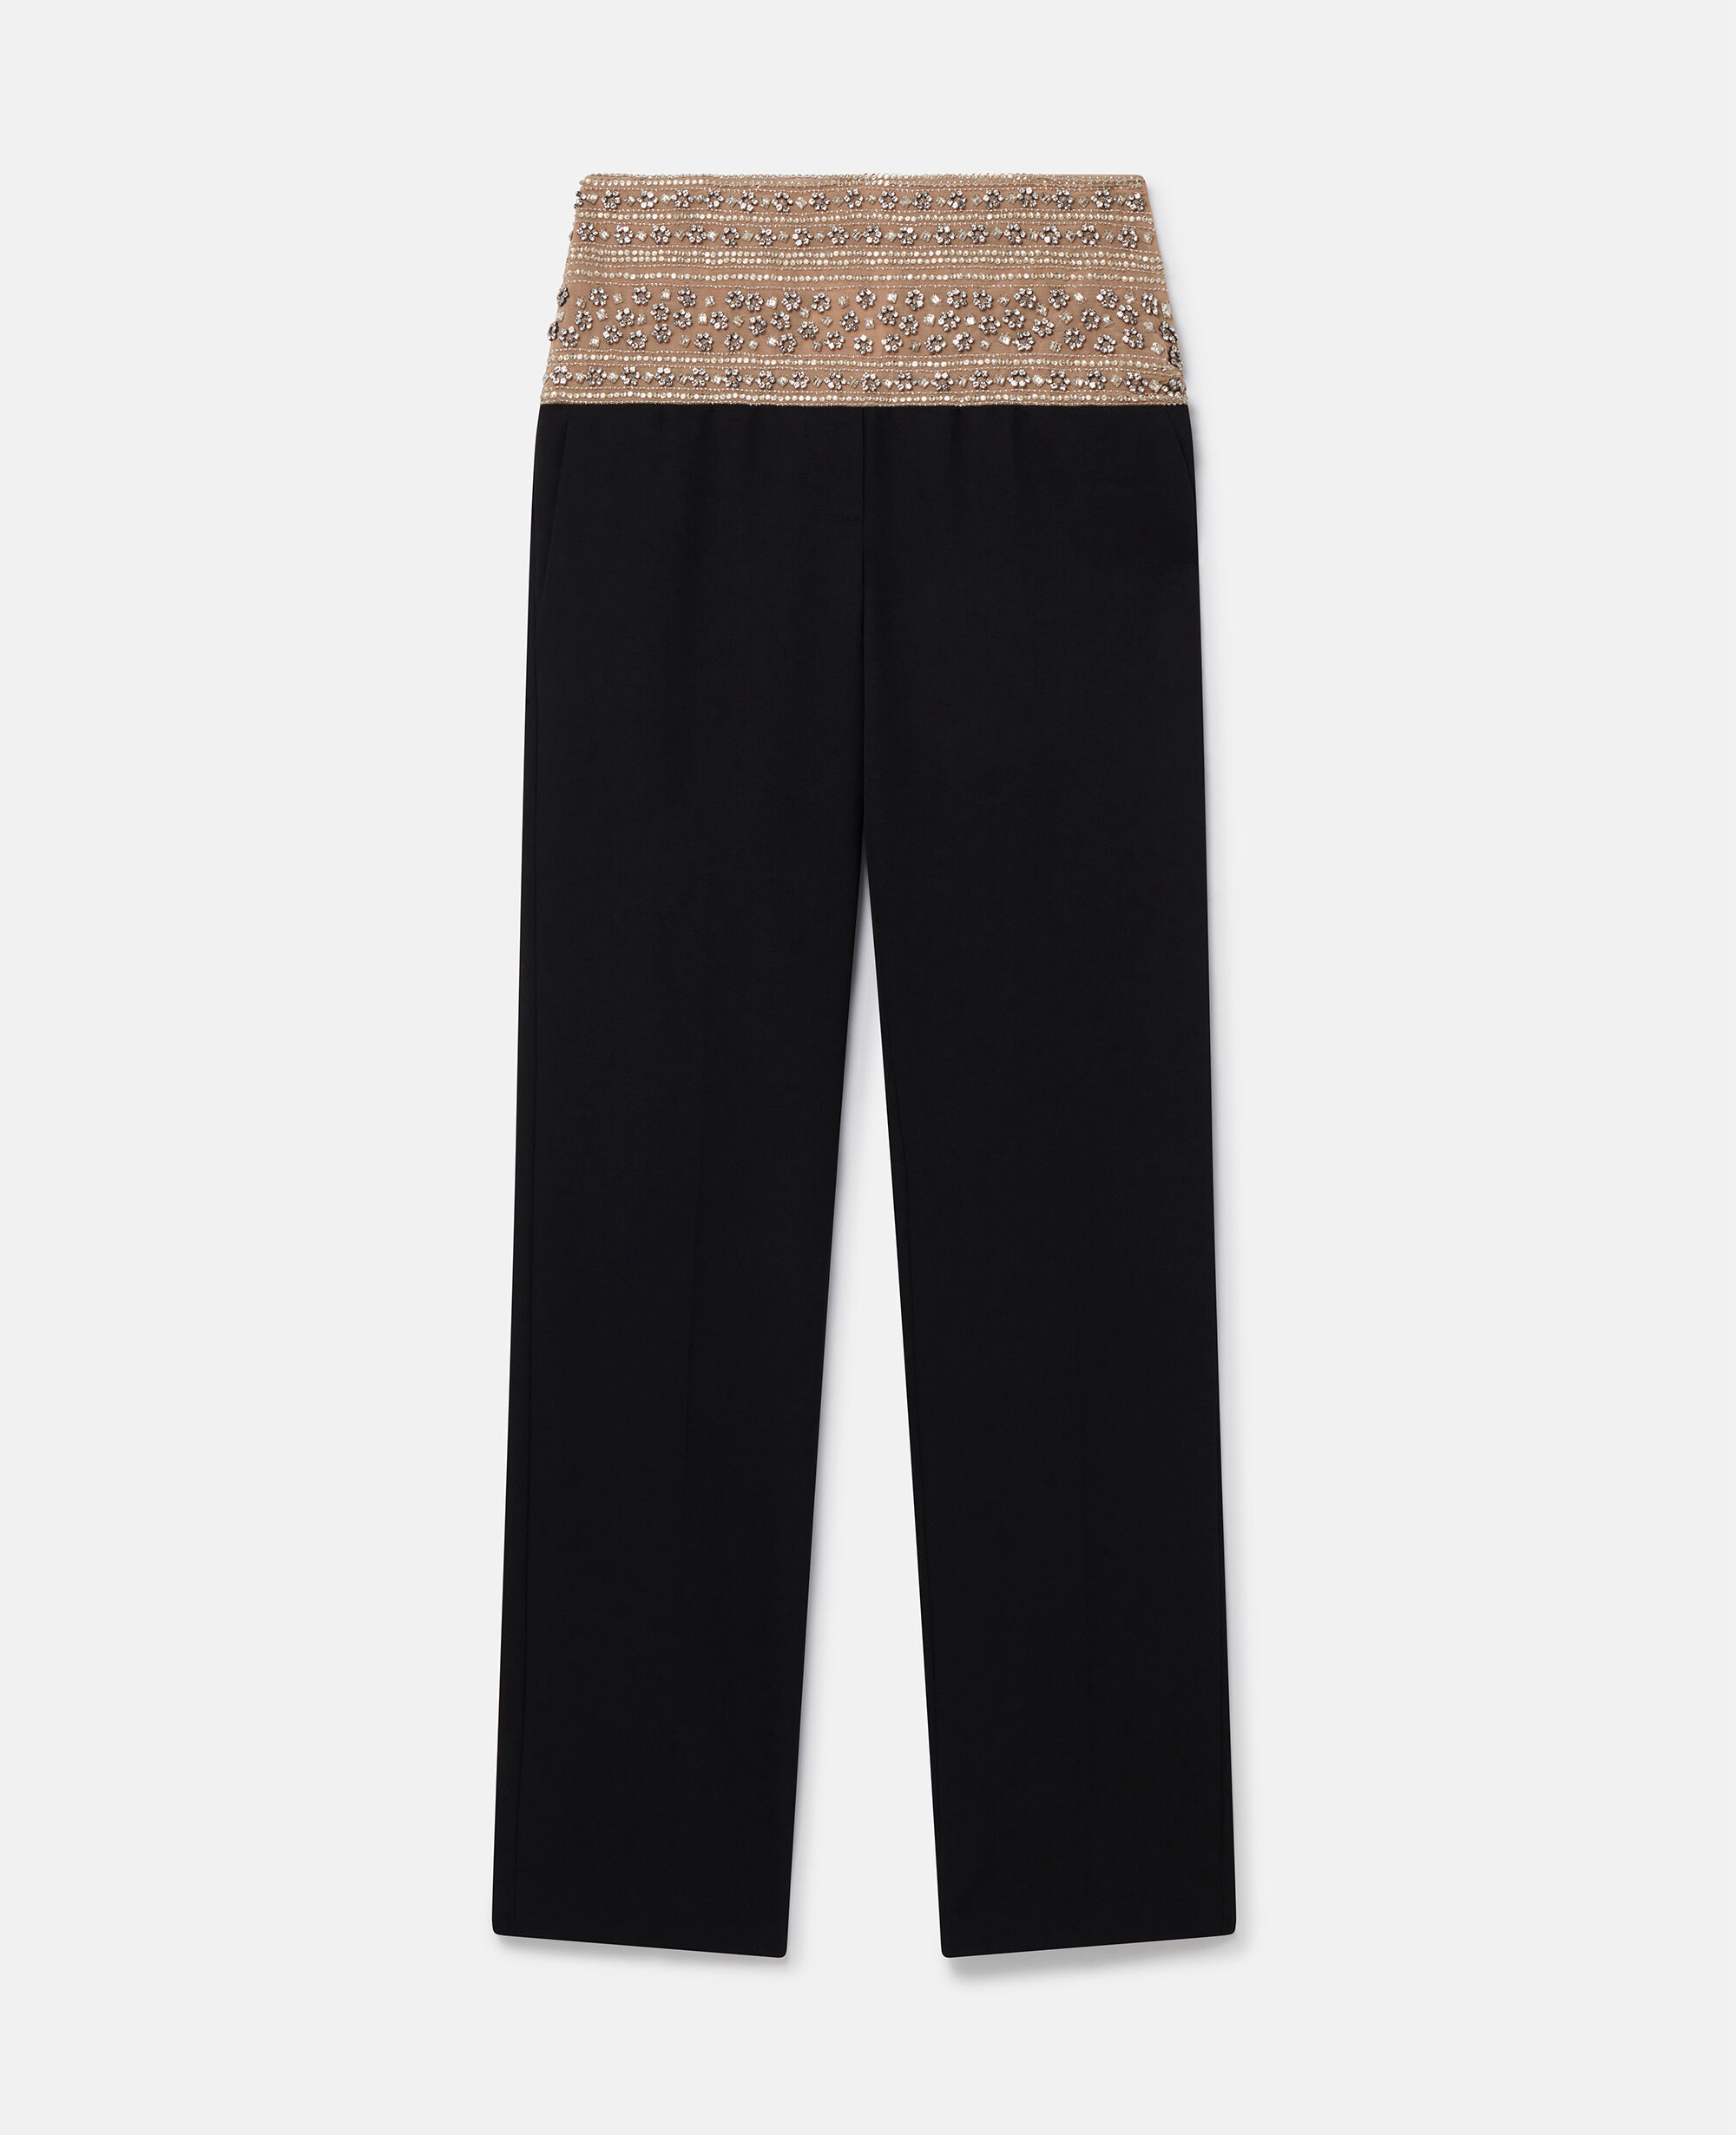 STELLA MCCARTNEY: trousers for women - Brown | Stella Mccartney trousers  5919643CJ700 online at GIGLIO.COM